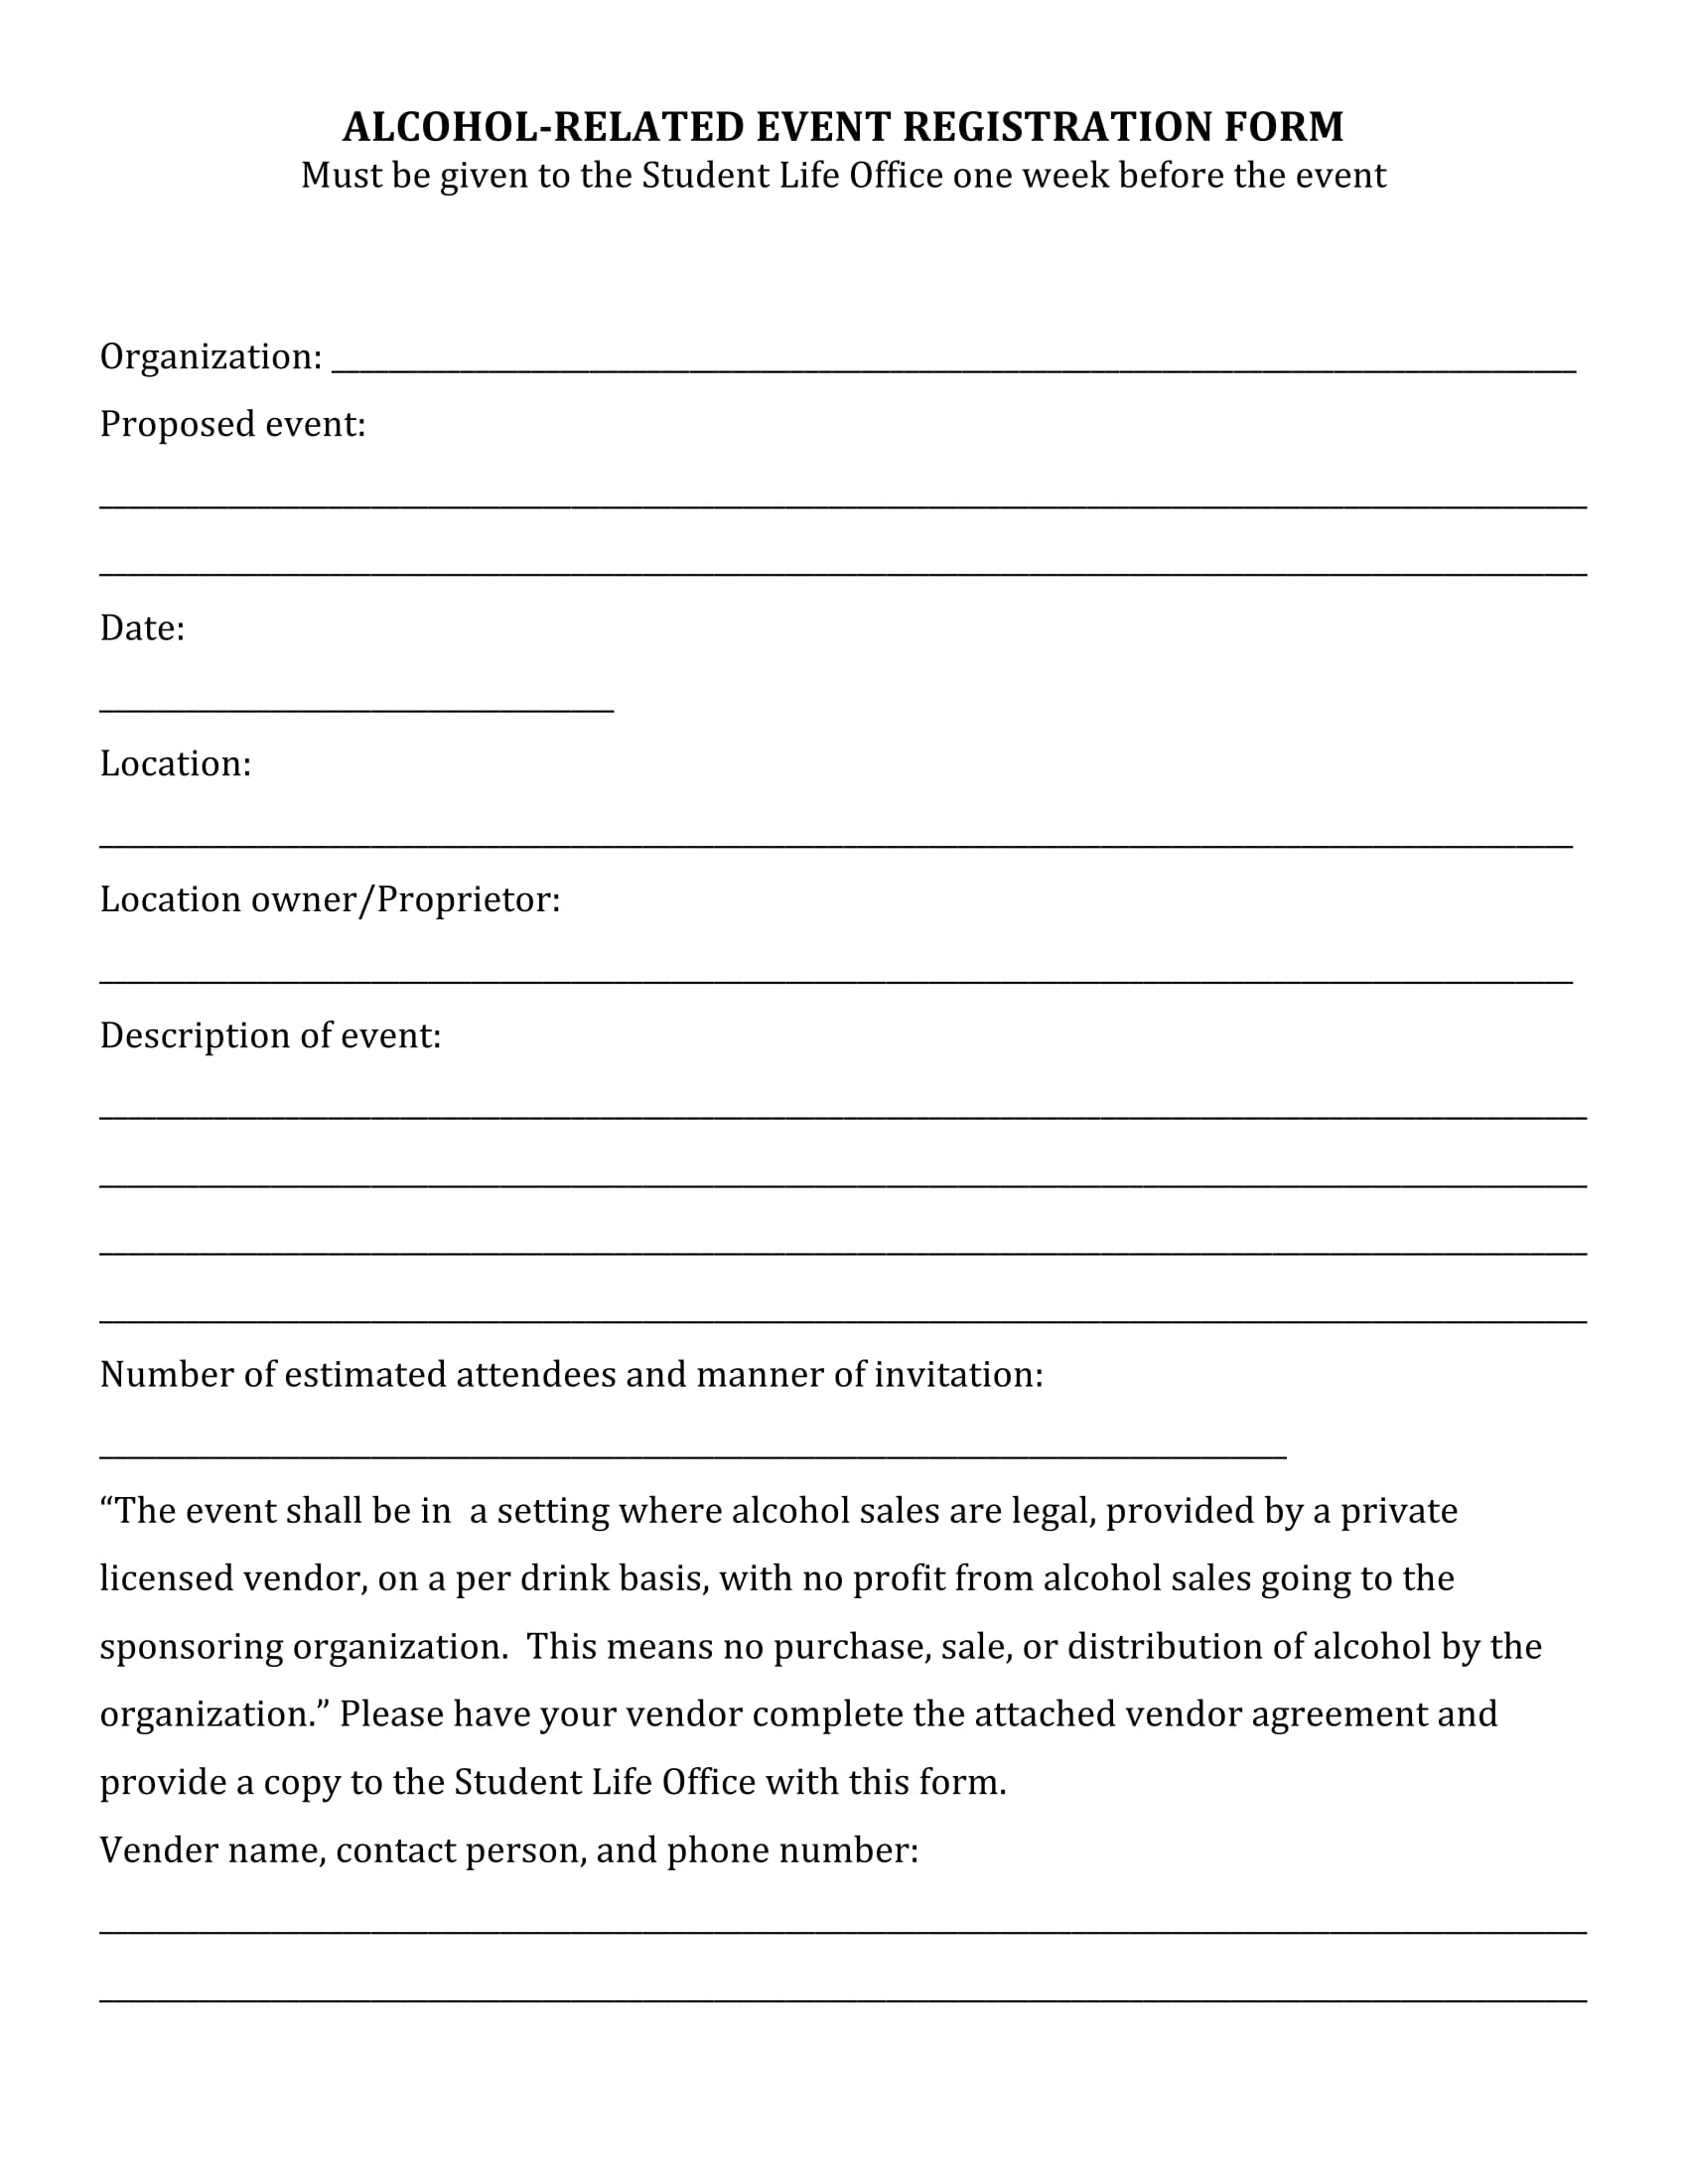 alcohol related event registration form 1